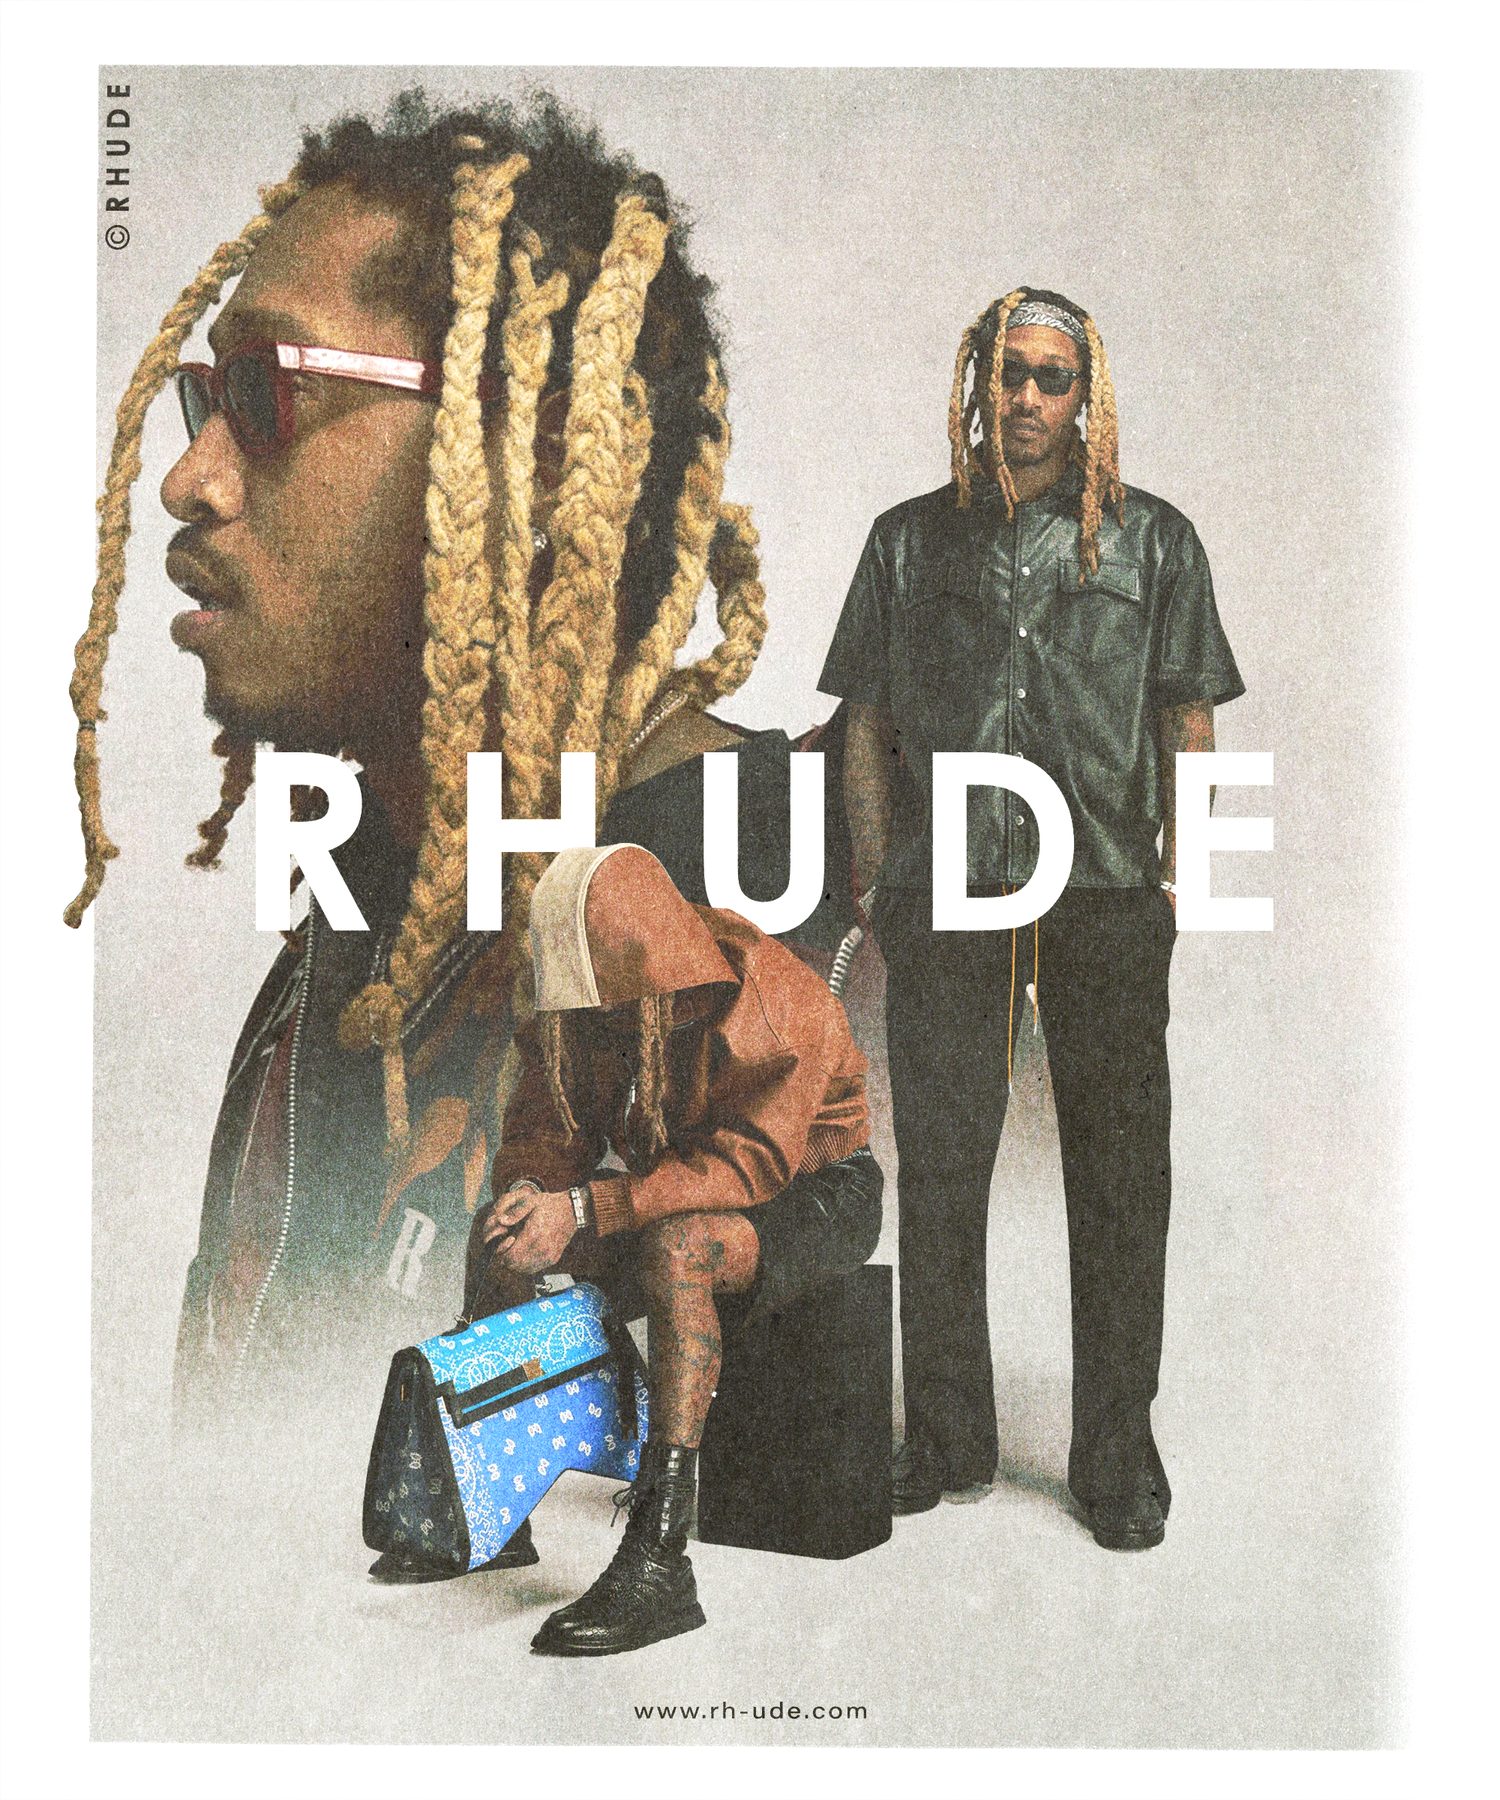 RHUDE-FUTURE-1.png